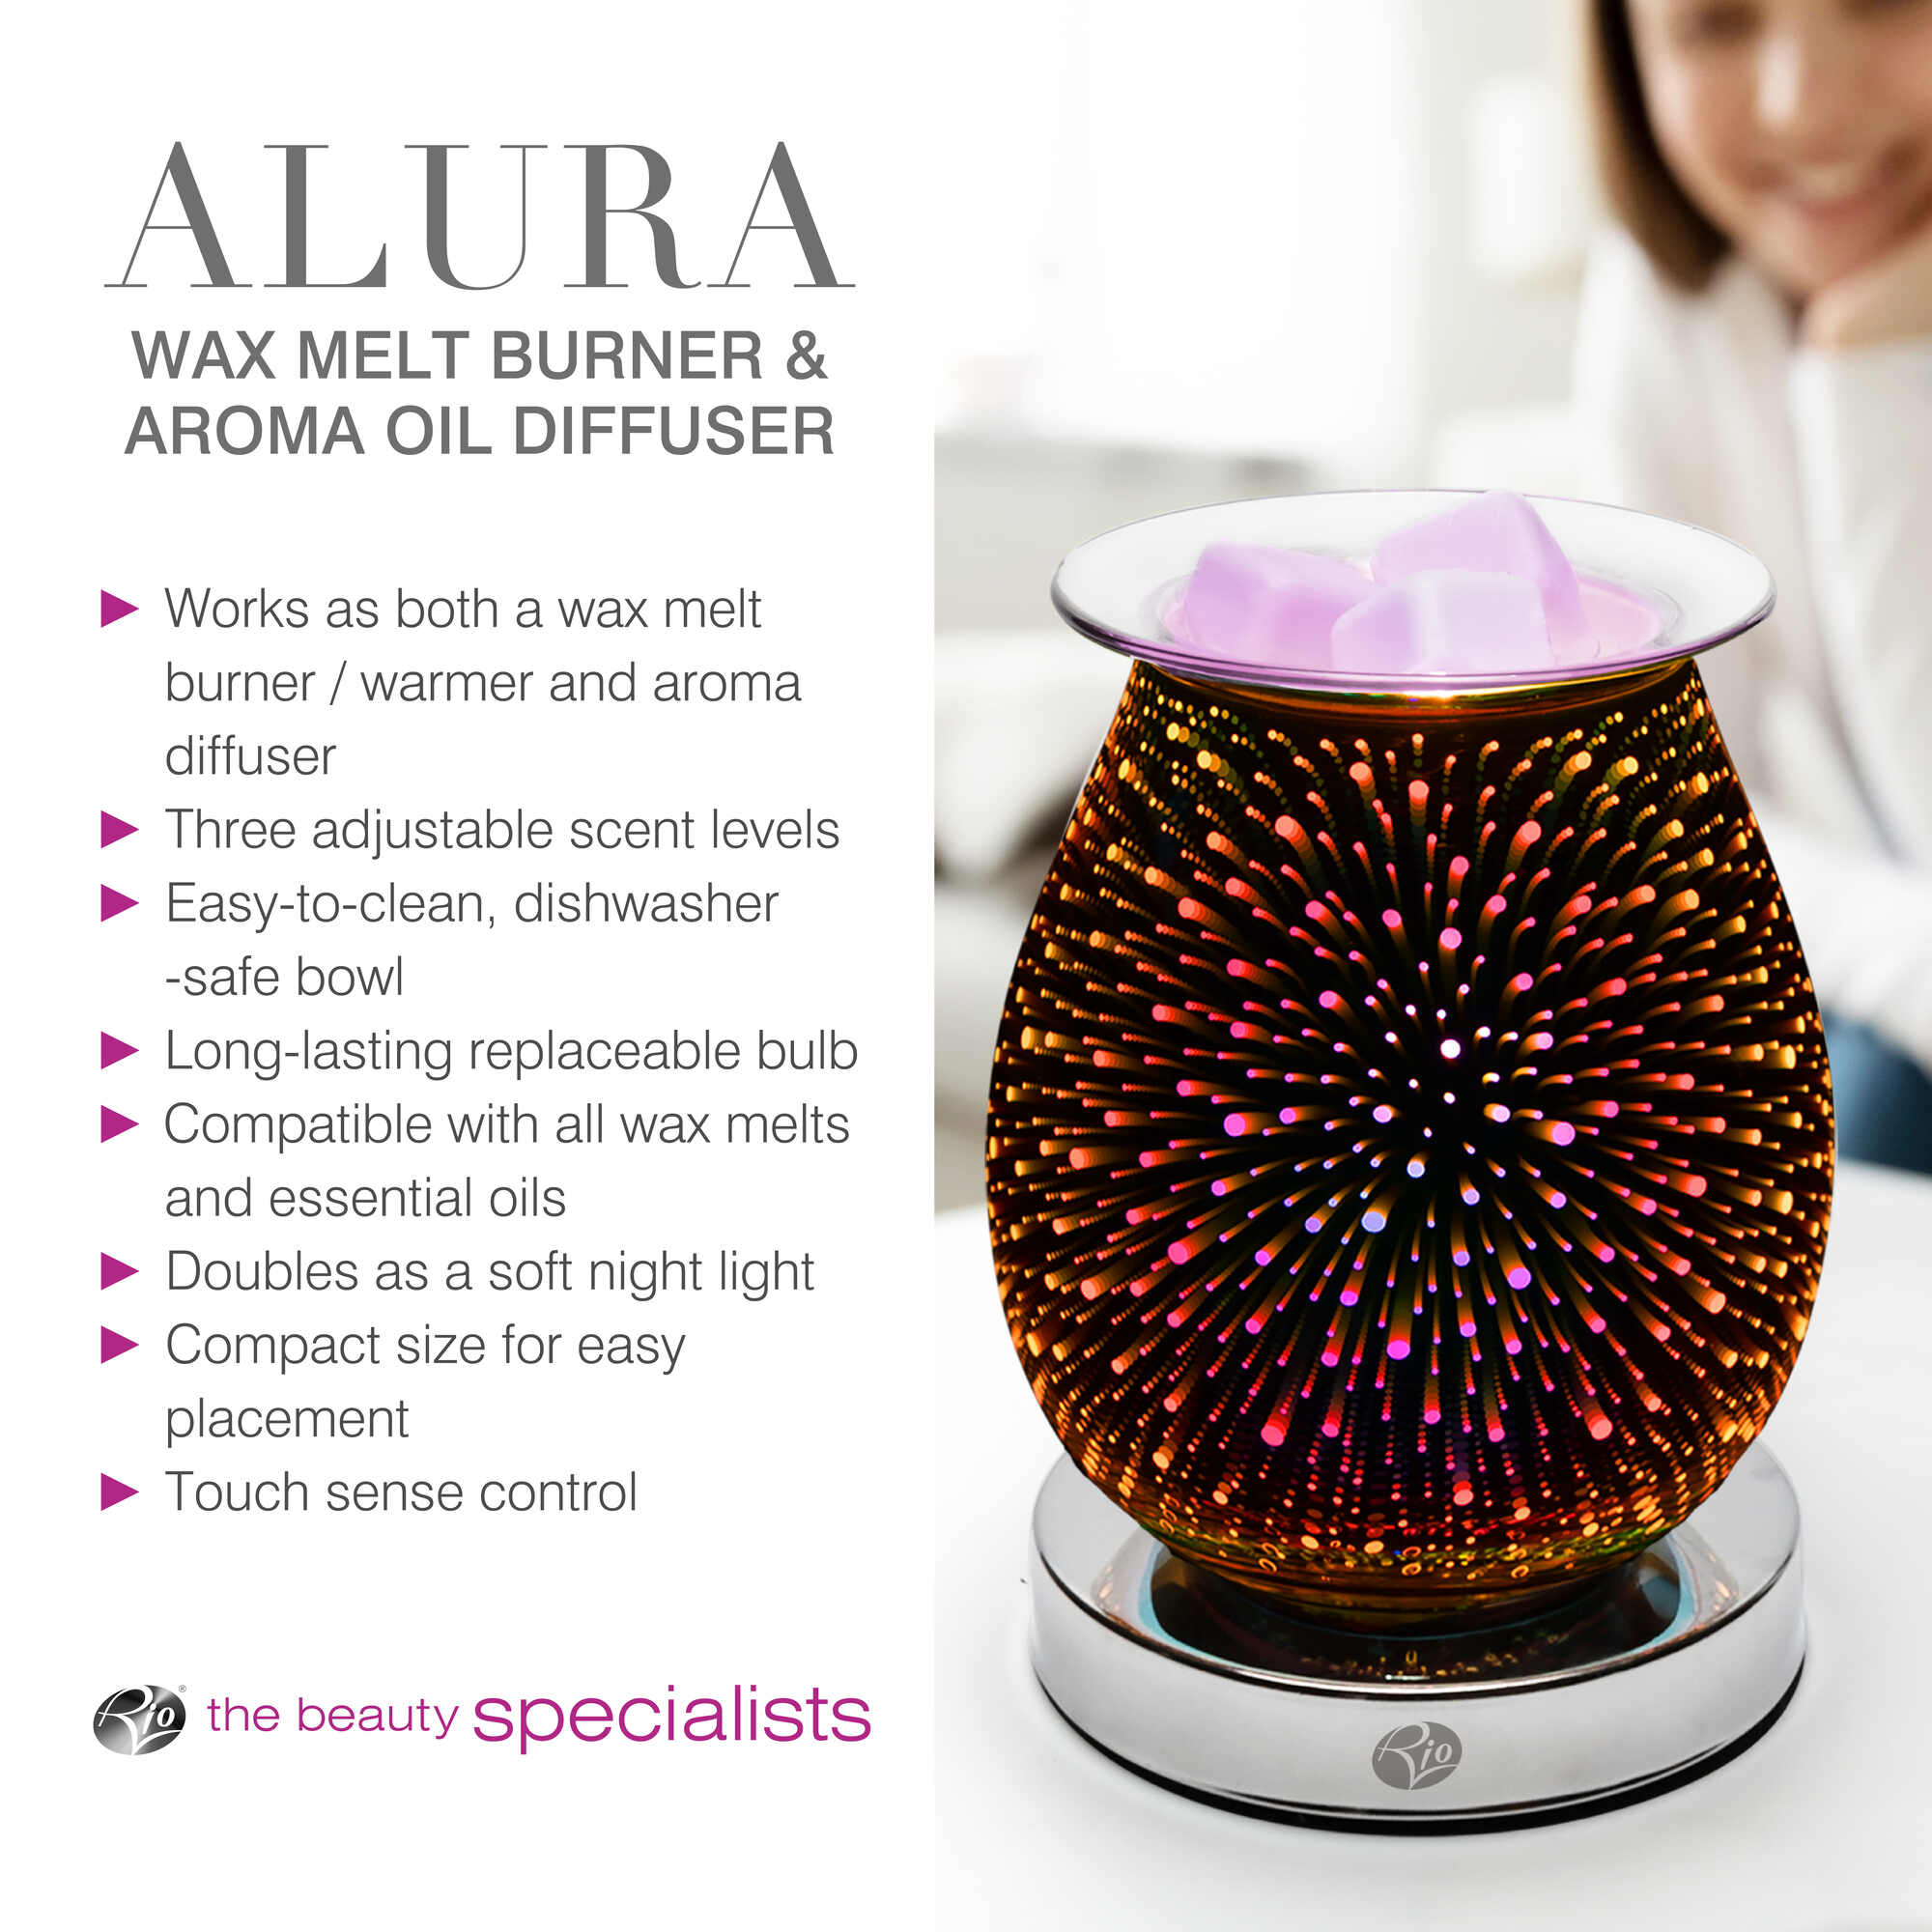 Alura Wax Melt Burner & Aroma Diffuser Lamp - Rio the Beauty Specialists